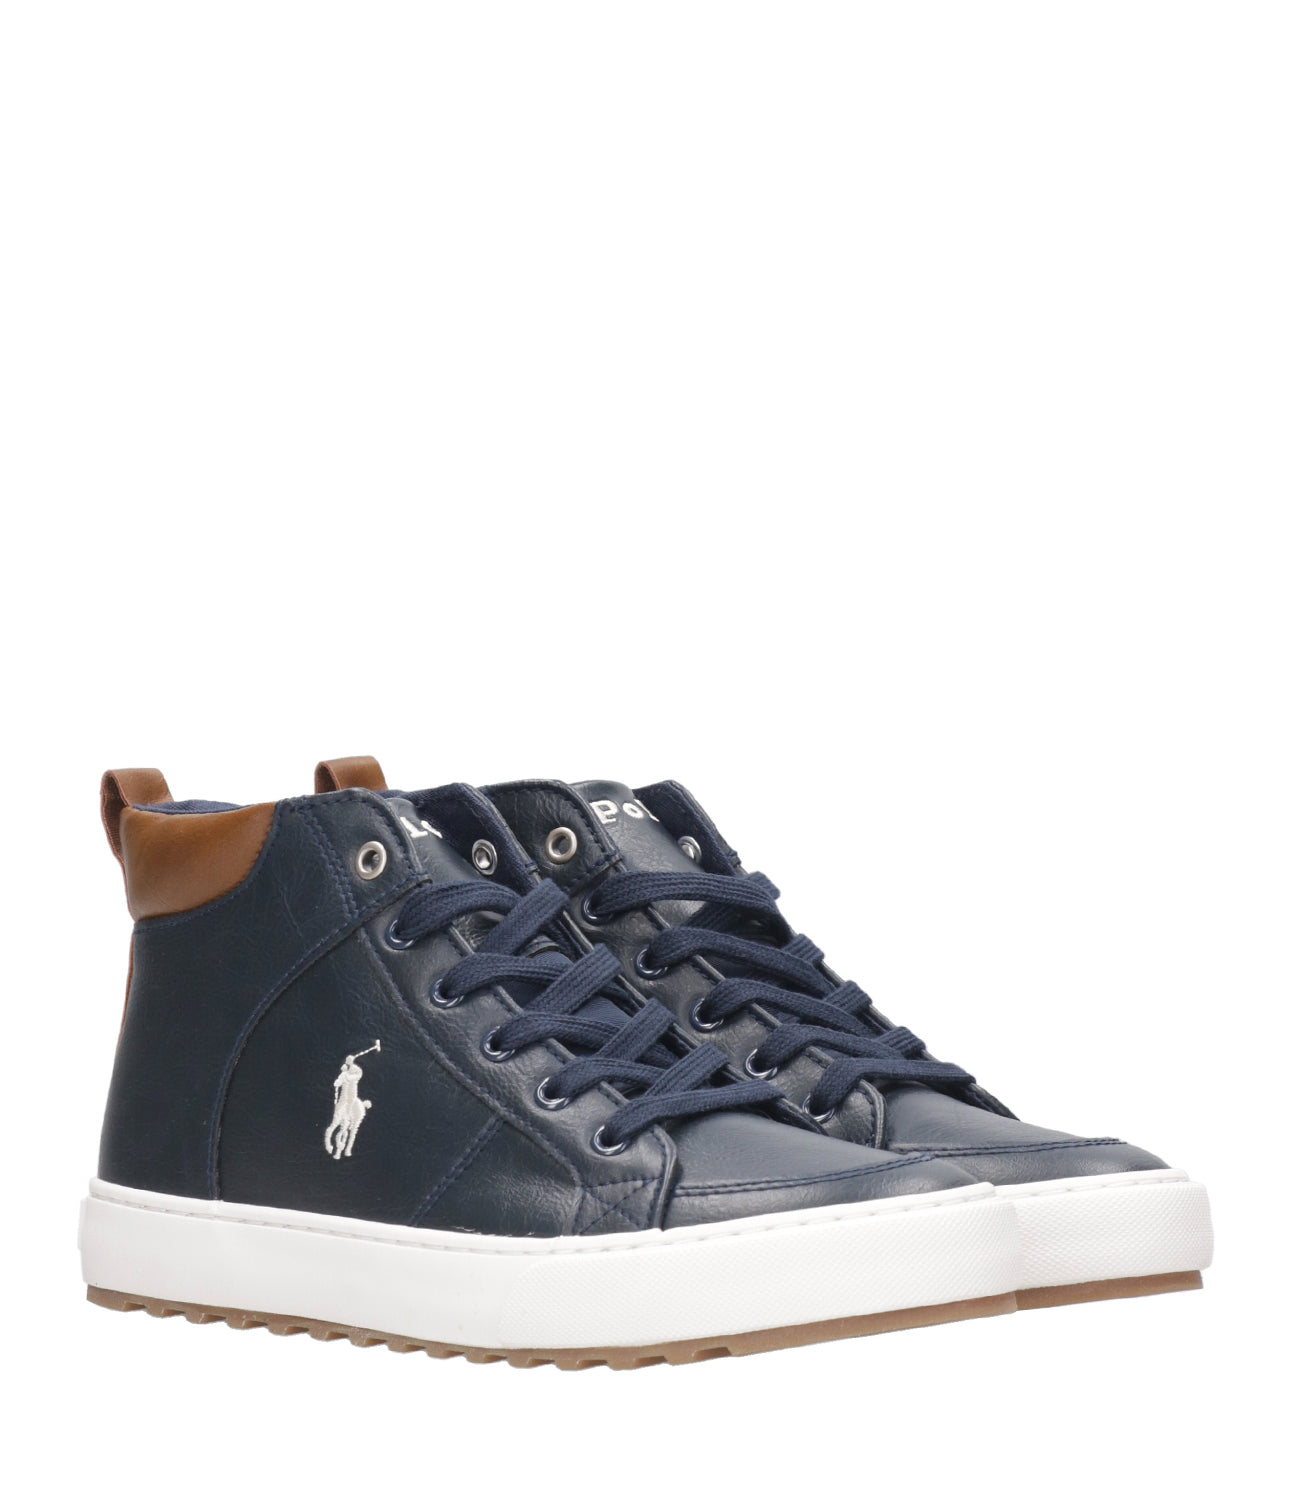 Ralph Lauren Childrenswear | High Sneakers Jaxson PS Navy Blue and White